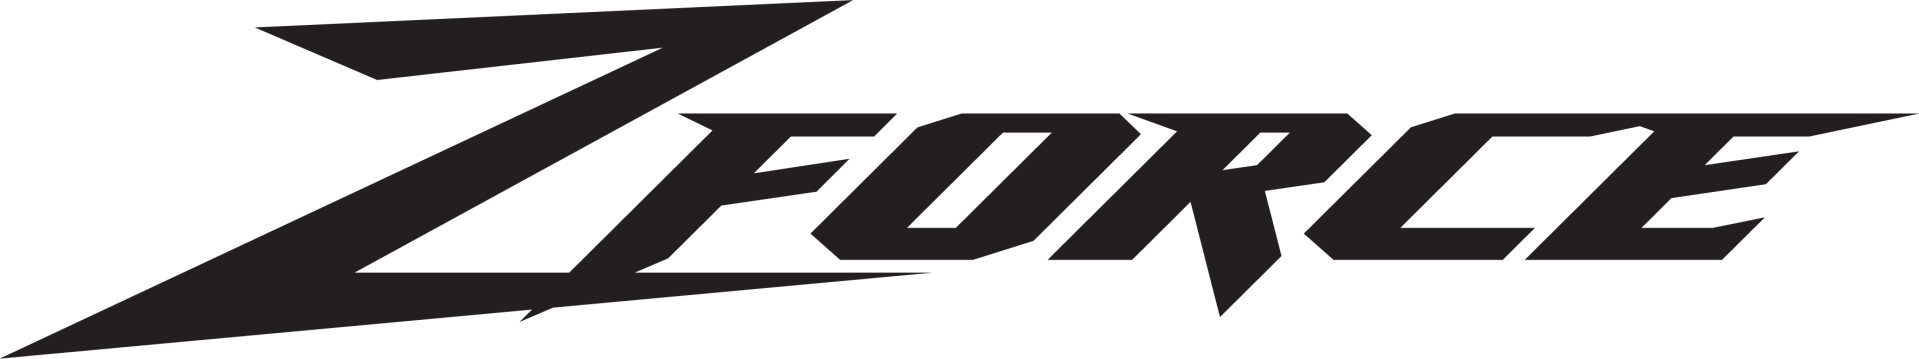 ZFORCE 950 Trail Logo